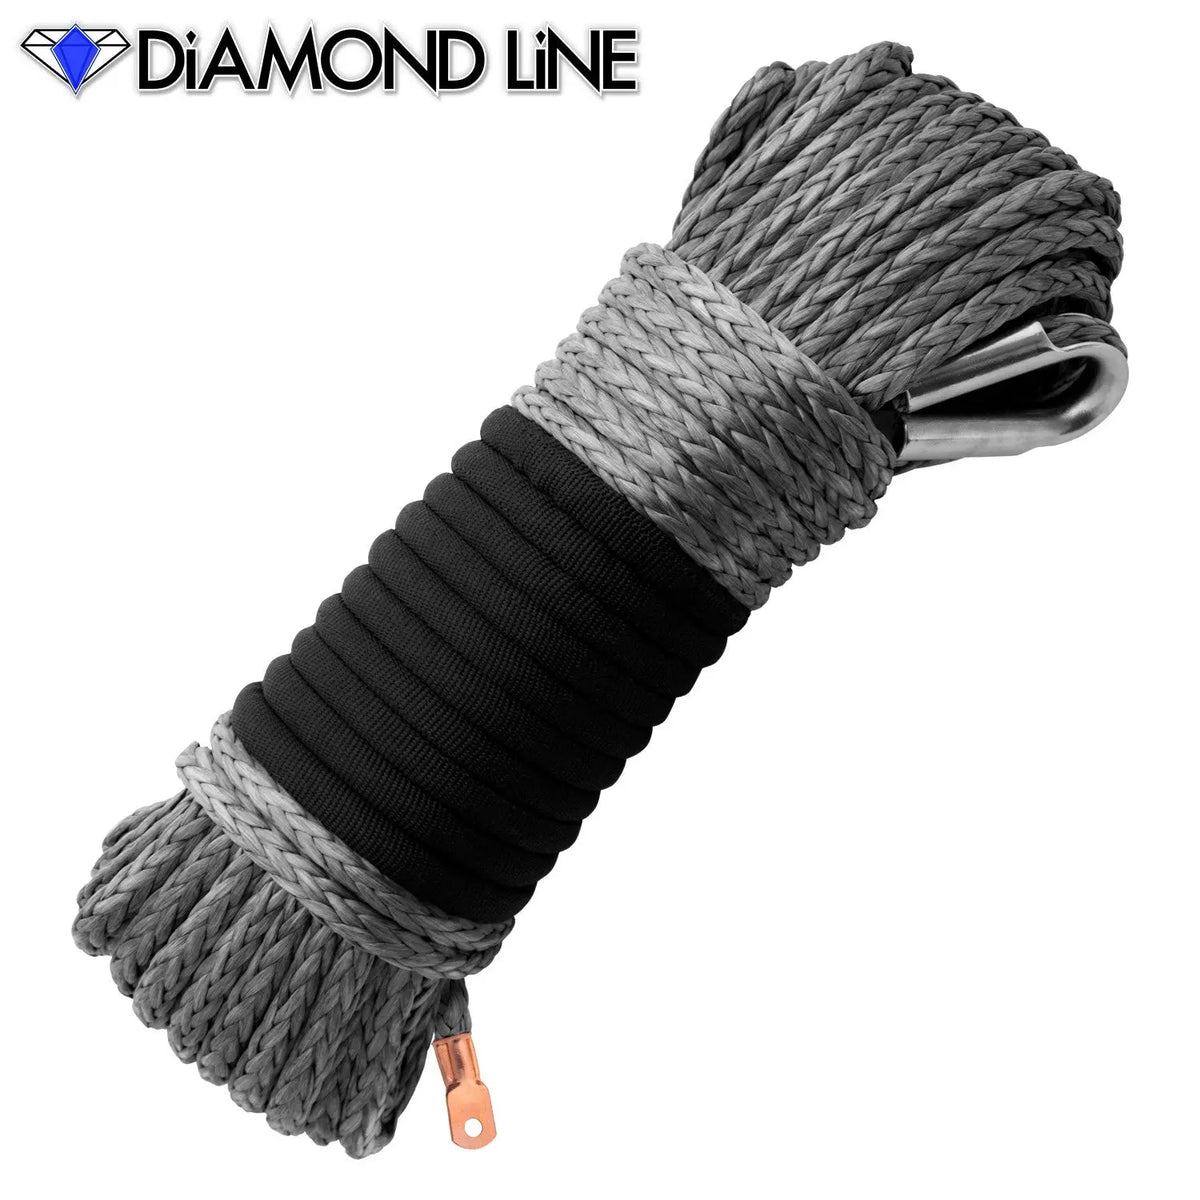 5/16" Diamond Line Winch Rope Mainline - Gray. 